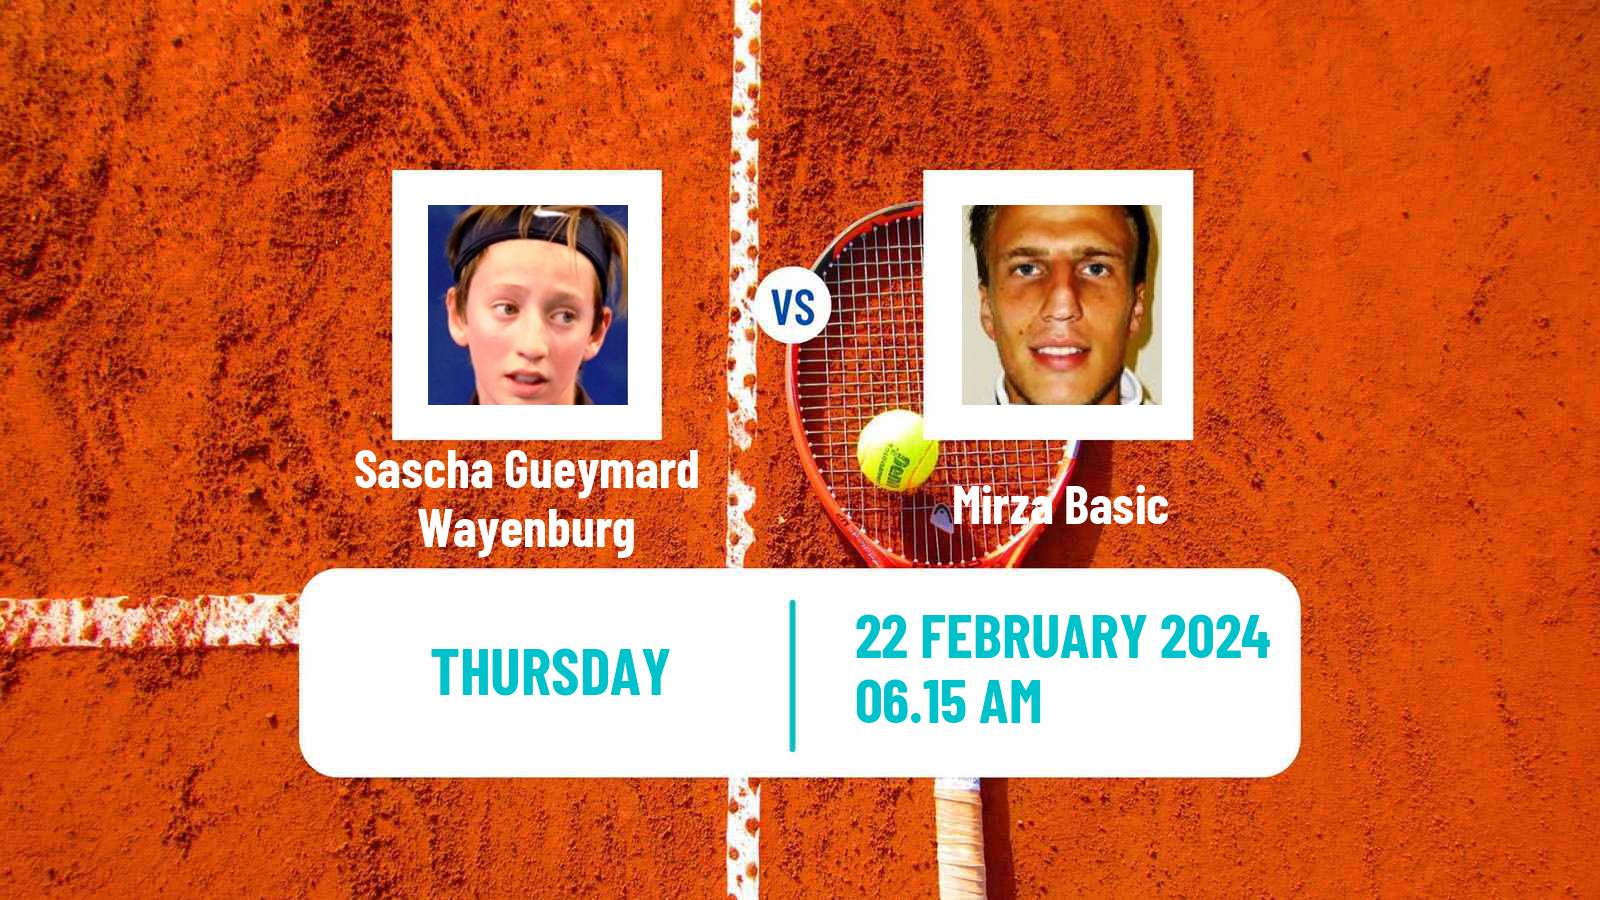 Tennis ITF M25 Trento Men Sascha Gueymard Wayenburg - Mirza Basic